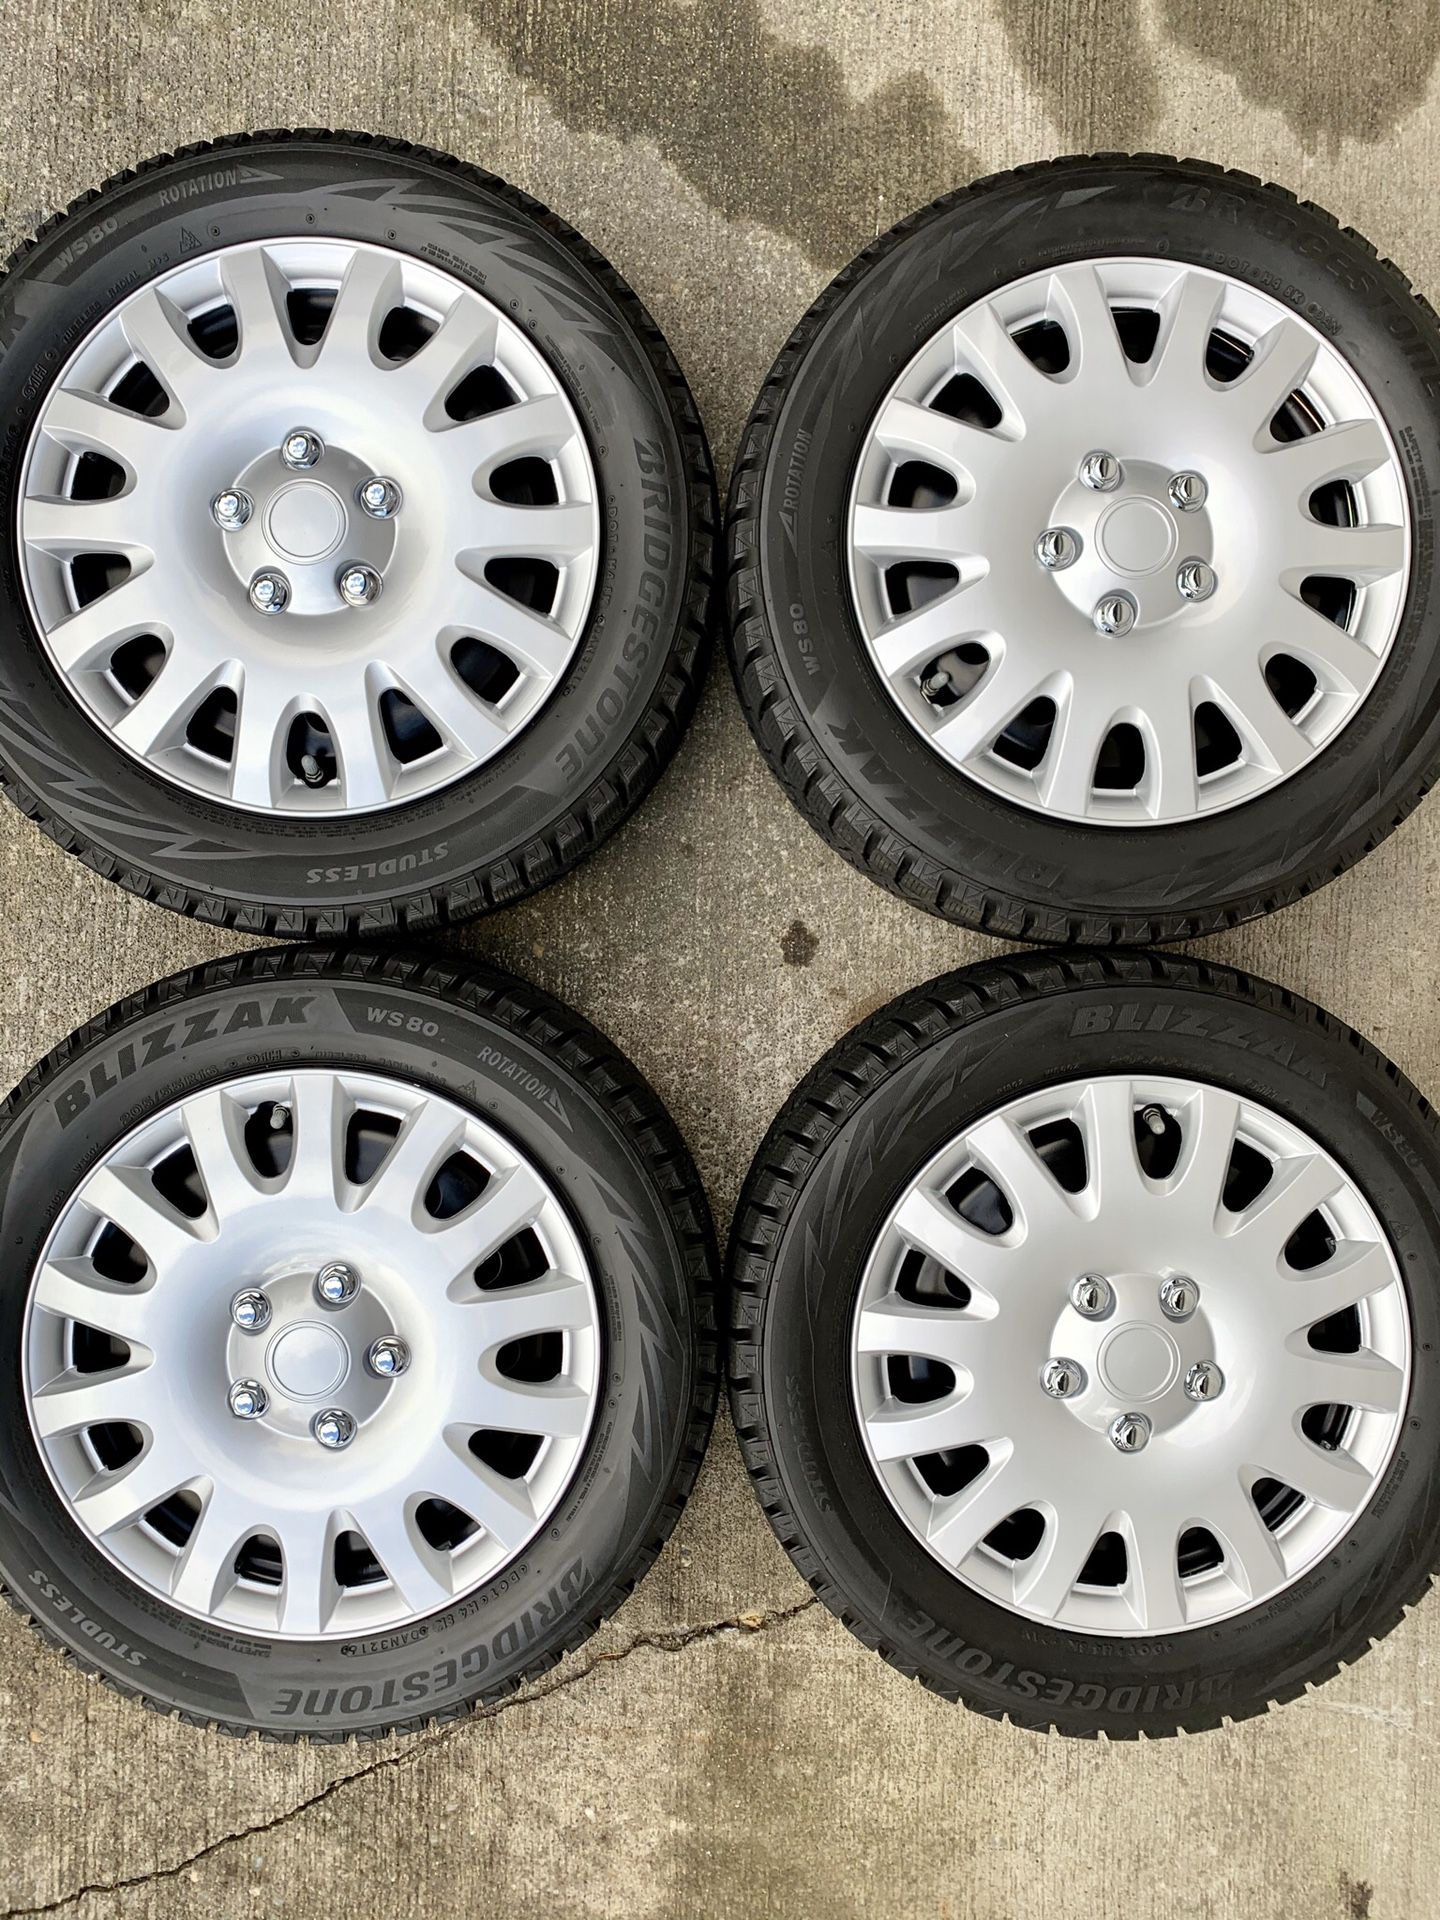 205 55 16 Blizzak studless winter tires on 16” Steel rims 5x108 & 5x114.3